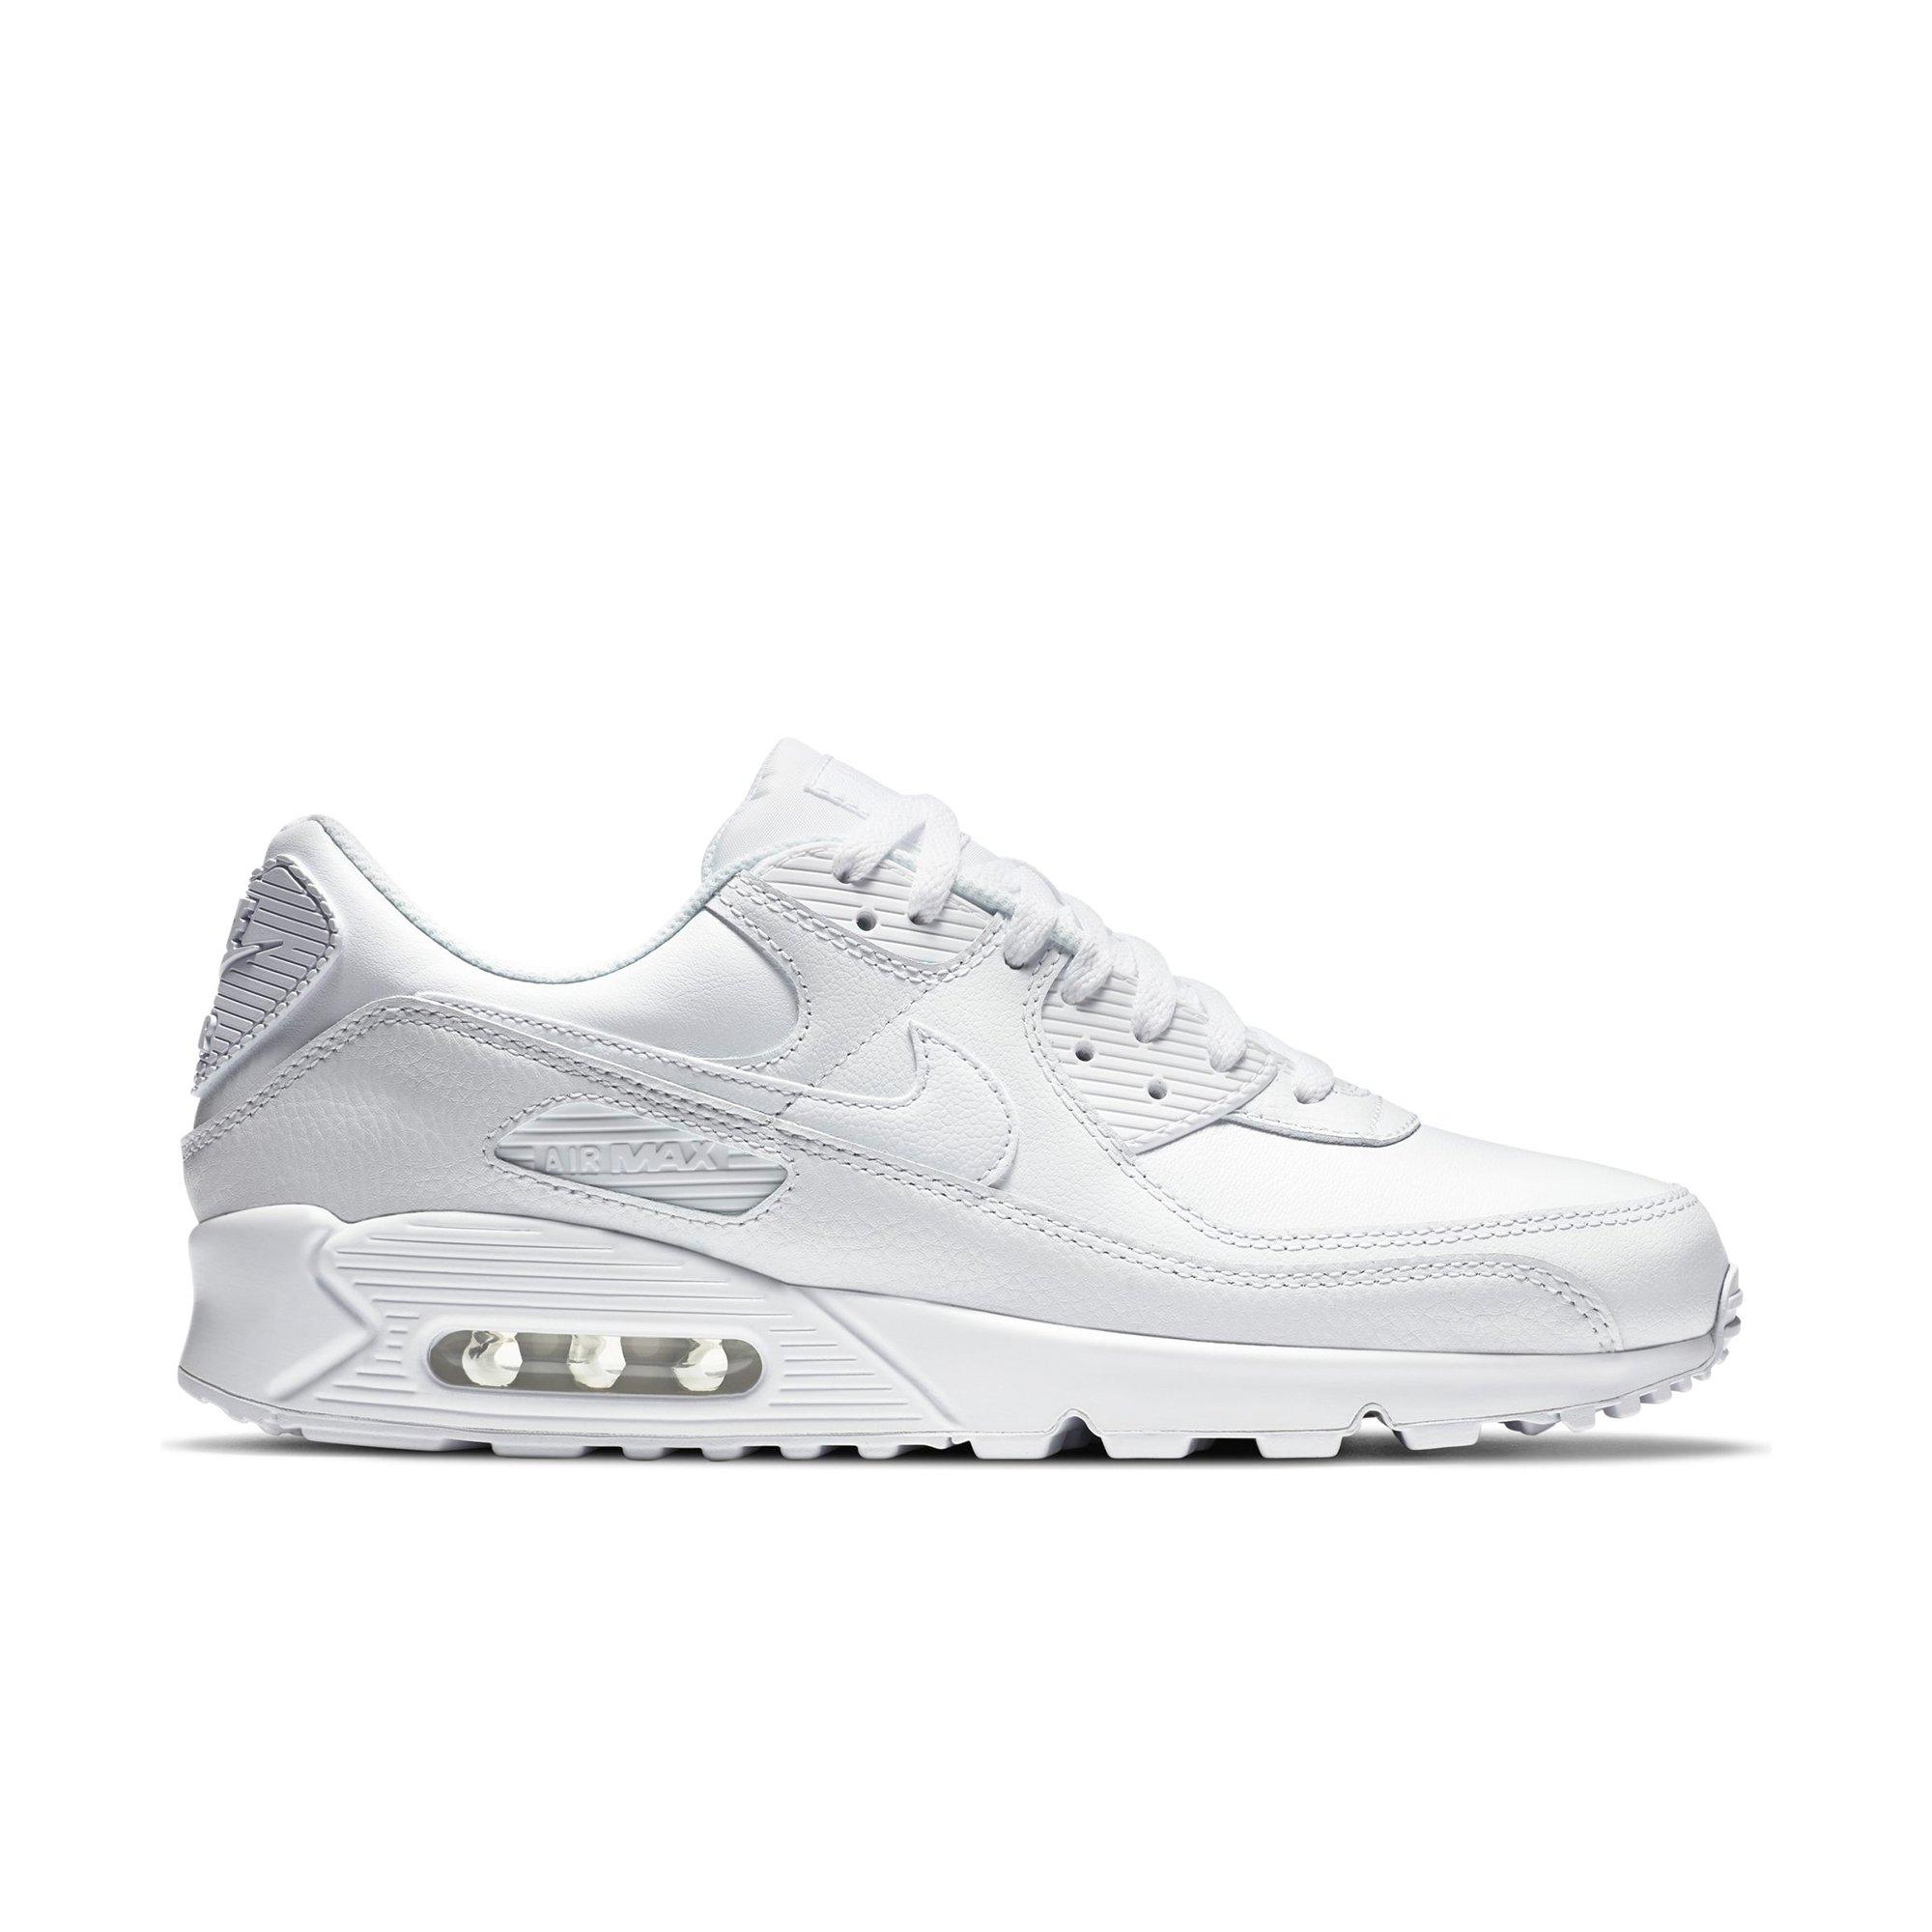 Air Max 90 Leather "White/White" Men's Shoe